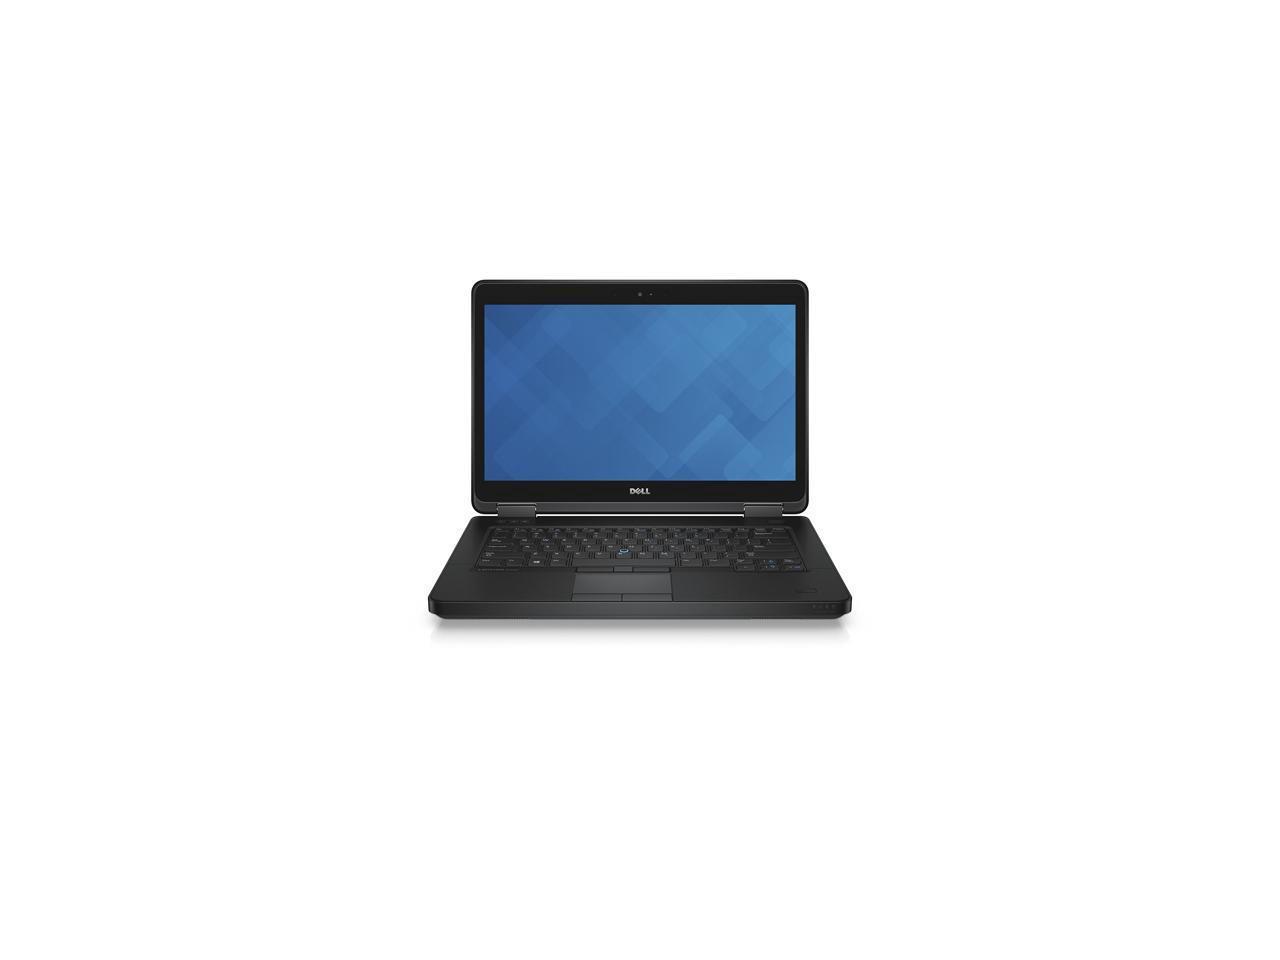 Refurbished Dell Latitude E5440 Laptop Computer Intel Core i5 Processor, 8GB Ram, 500GB Hard Drive, Windows 11 Operating System, 1 Year Warranty